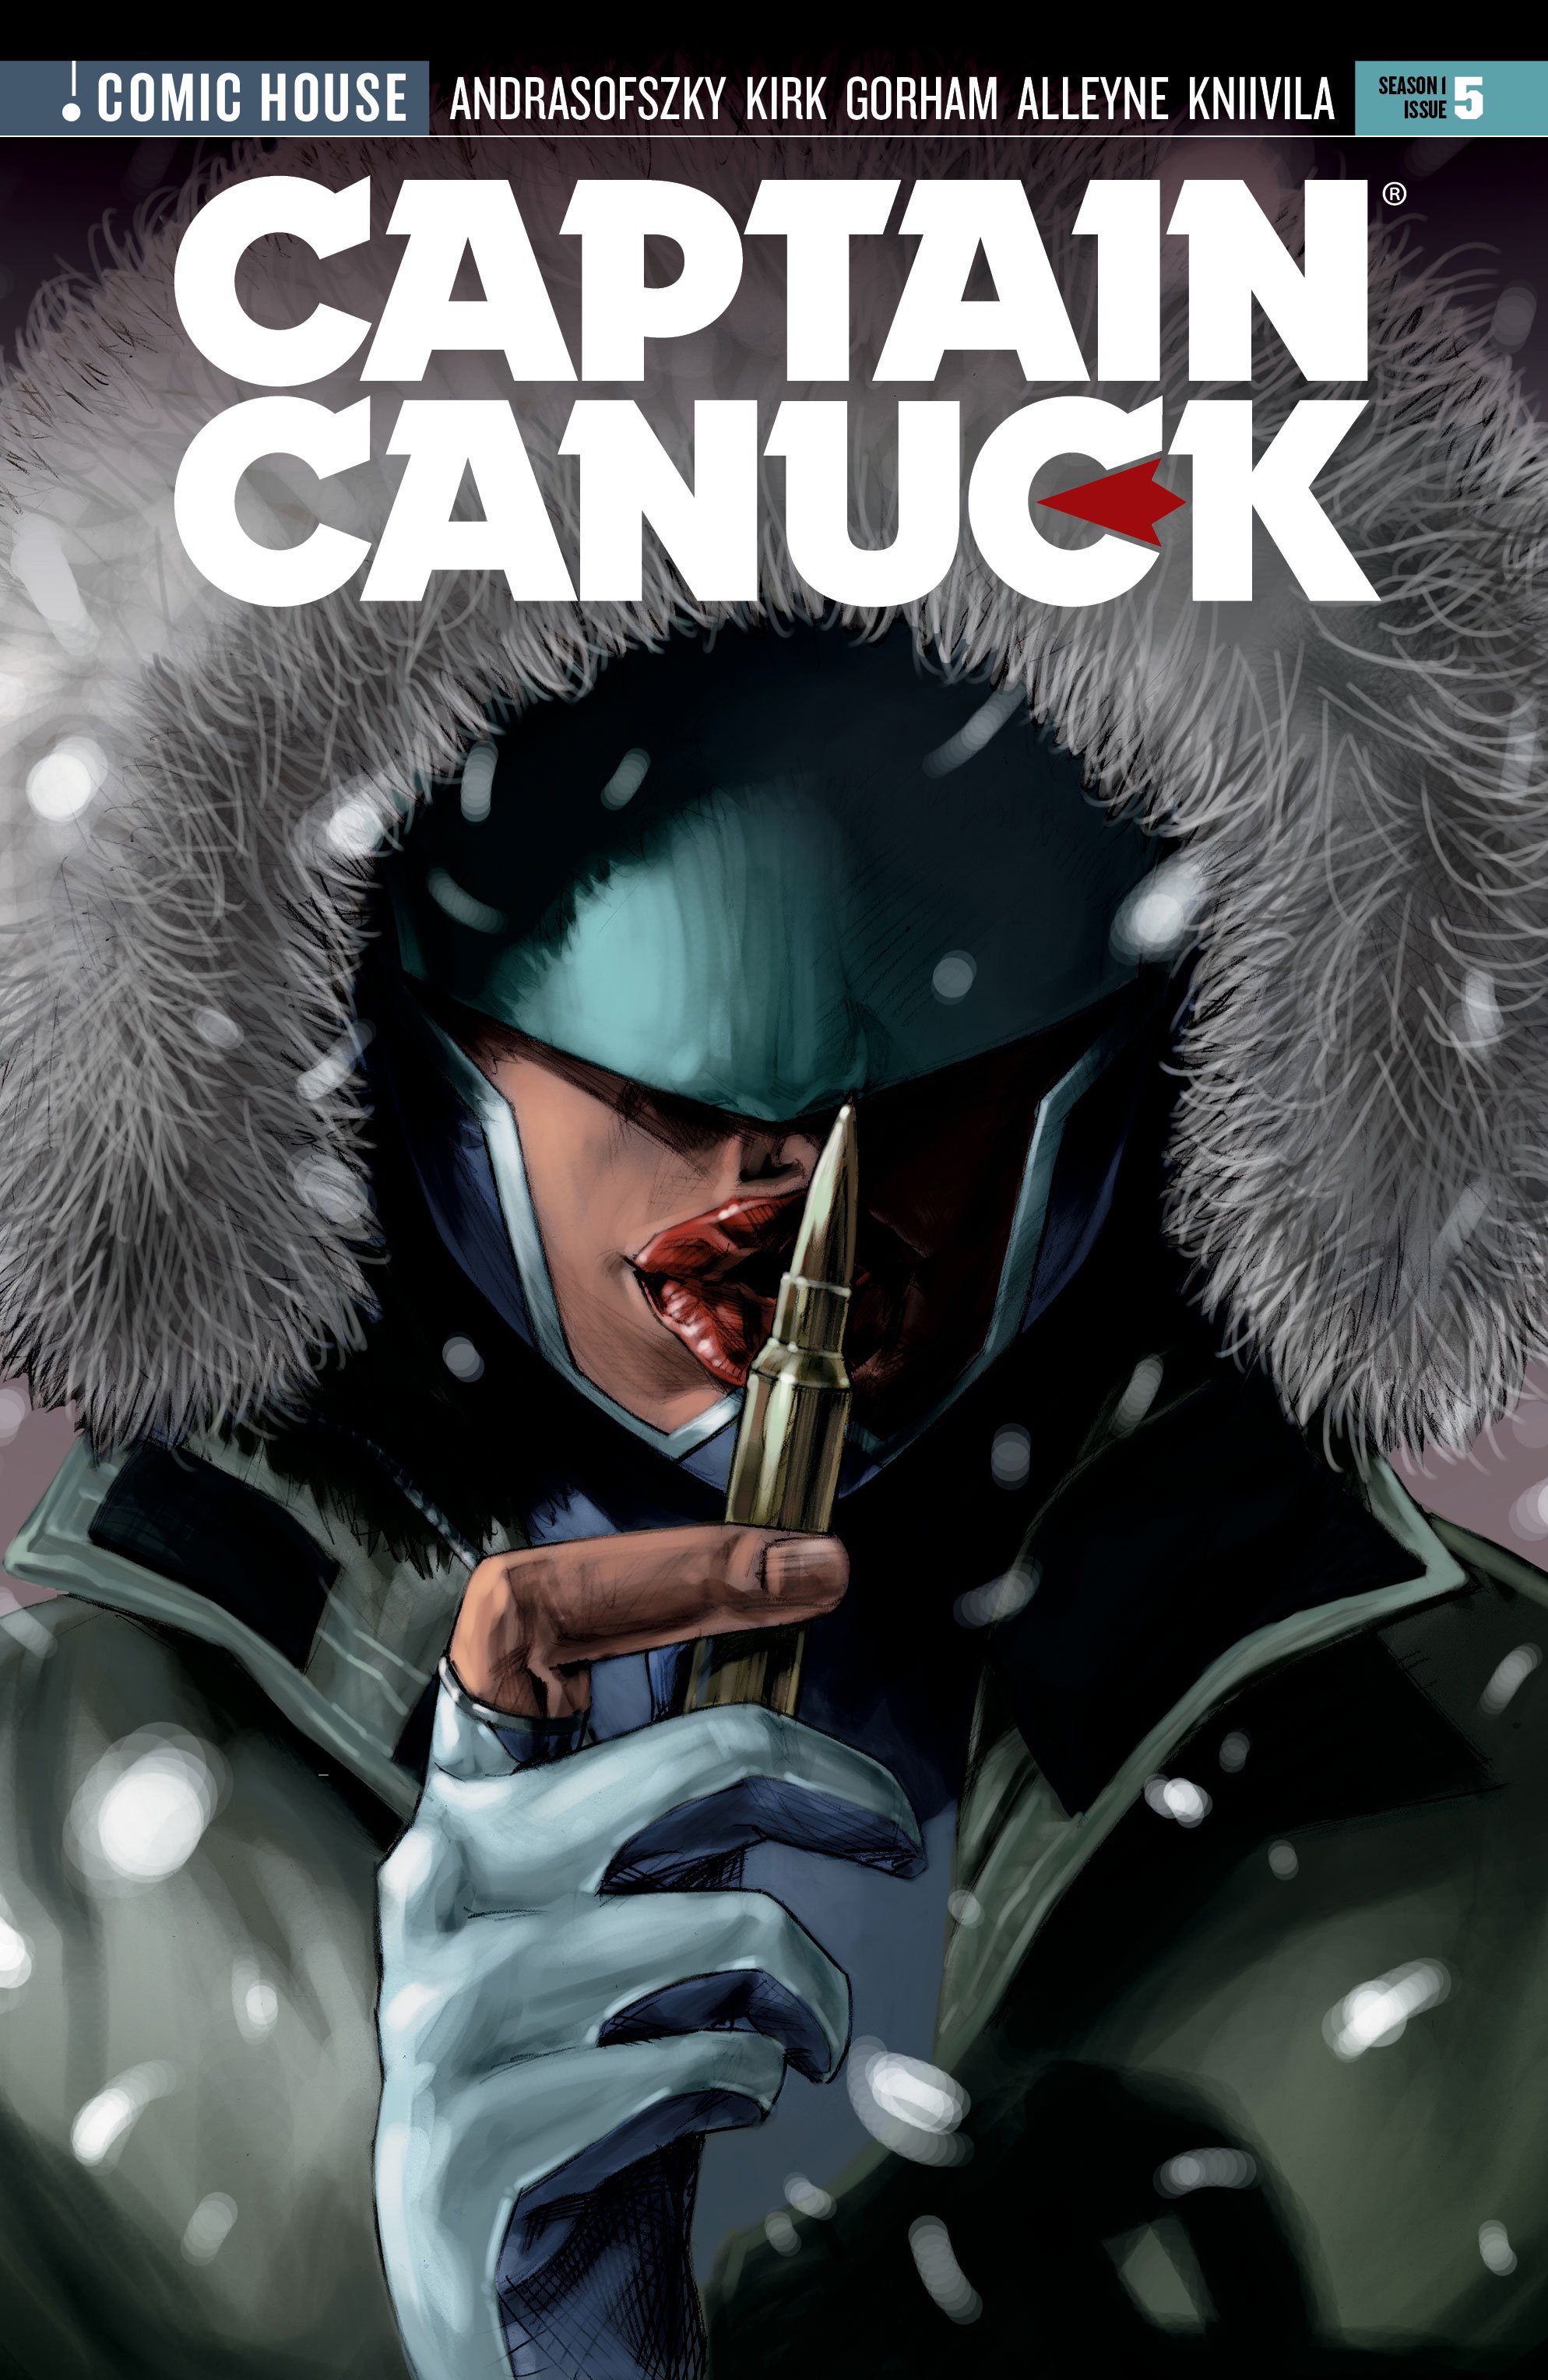 CaptainCanuck_005_S1_Issue5_cover-A.jpg